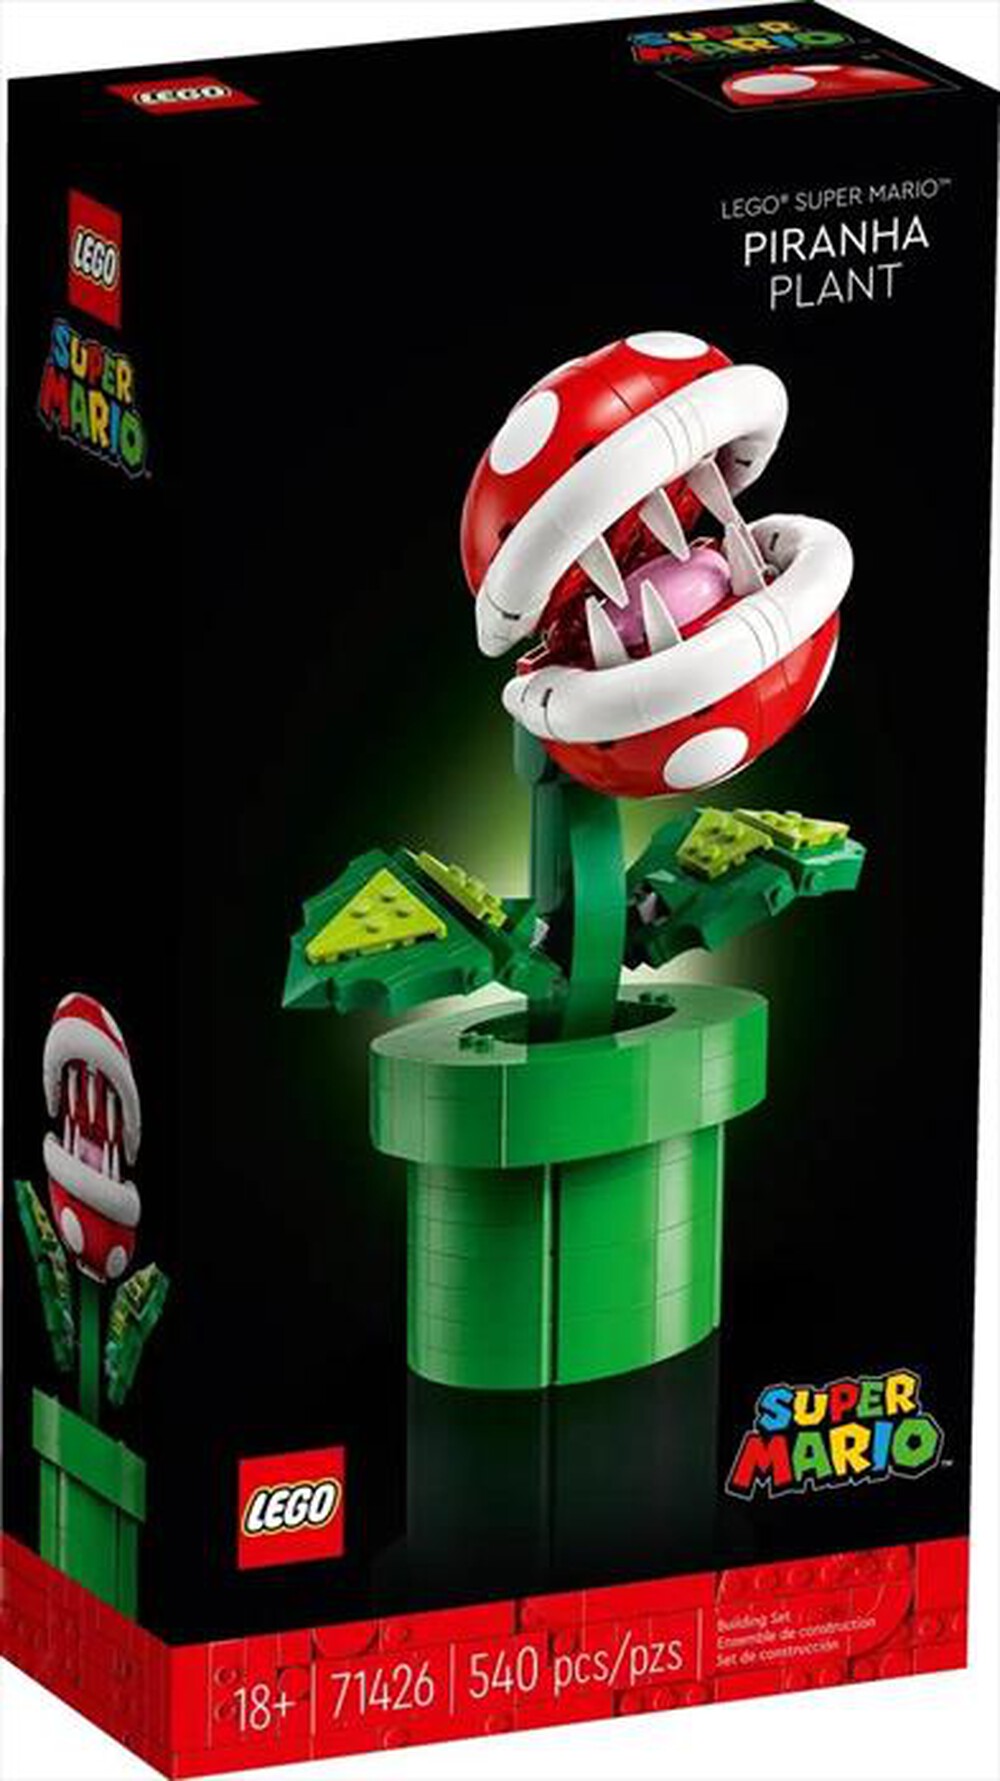 "LEGO - SUPER MARIO Pianta Piranha - 71426"